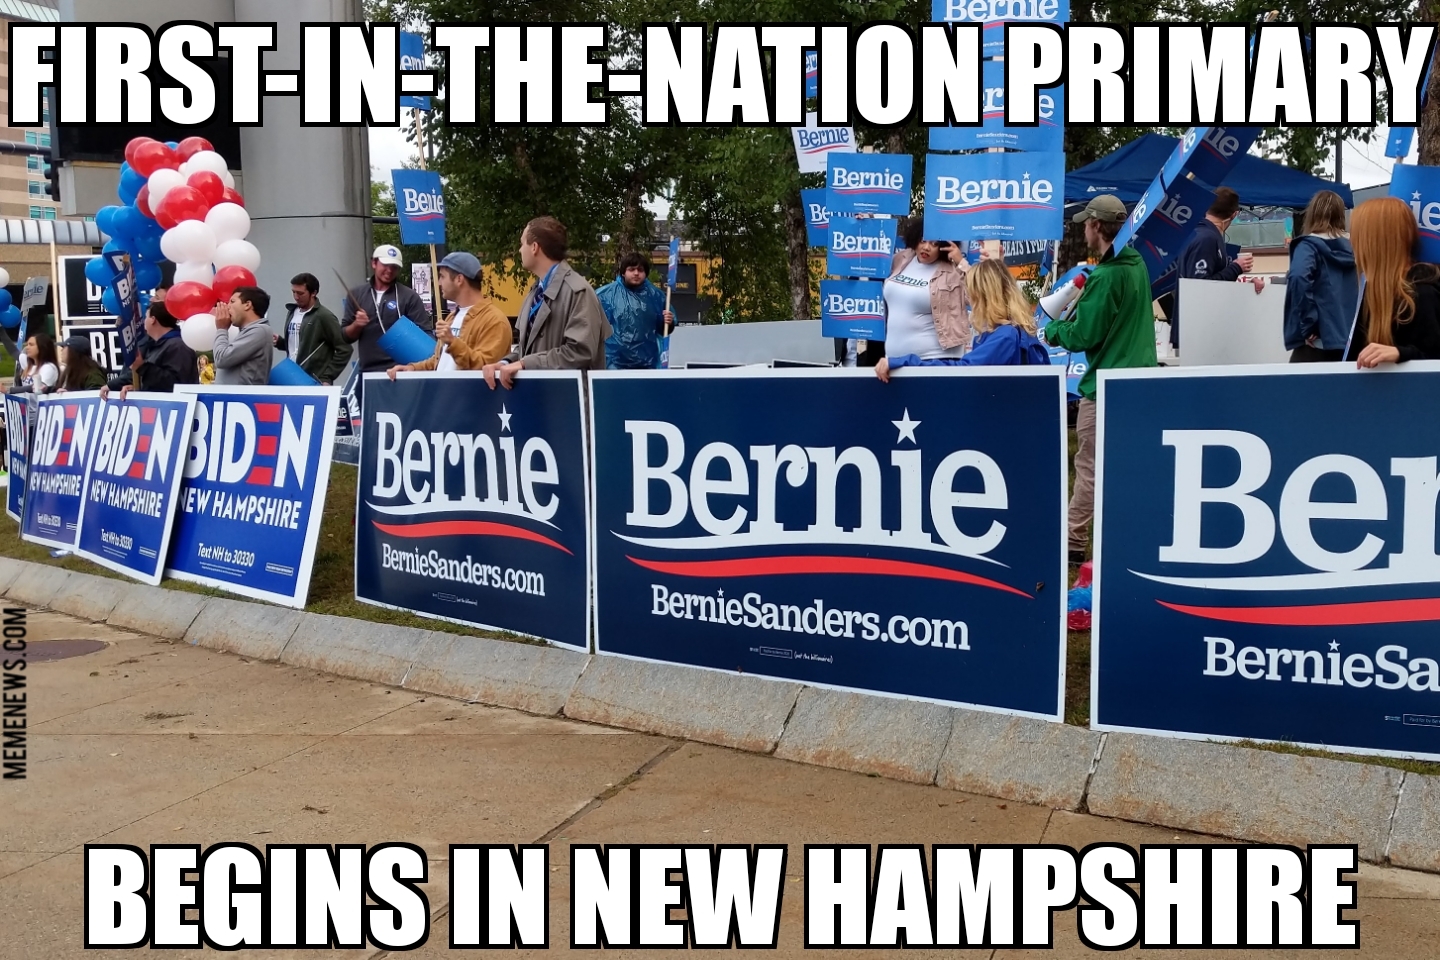 New Hampshire Primary begins